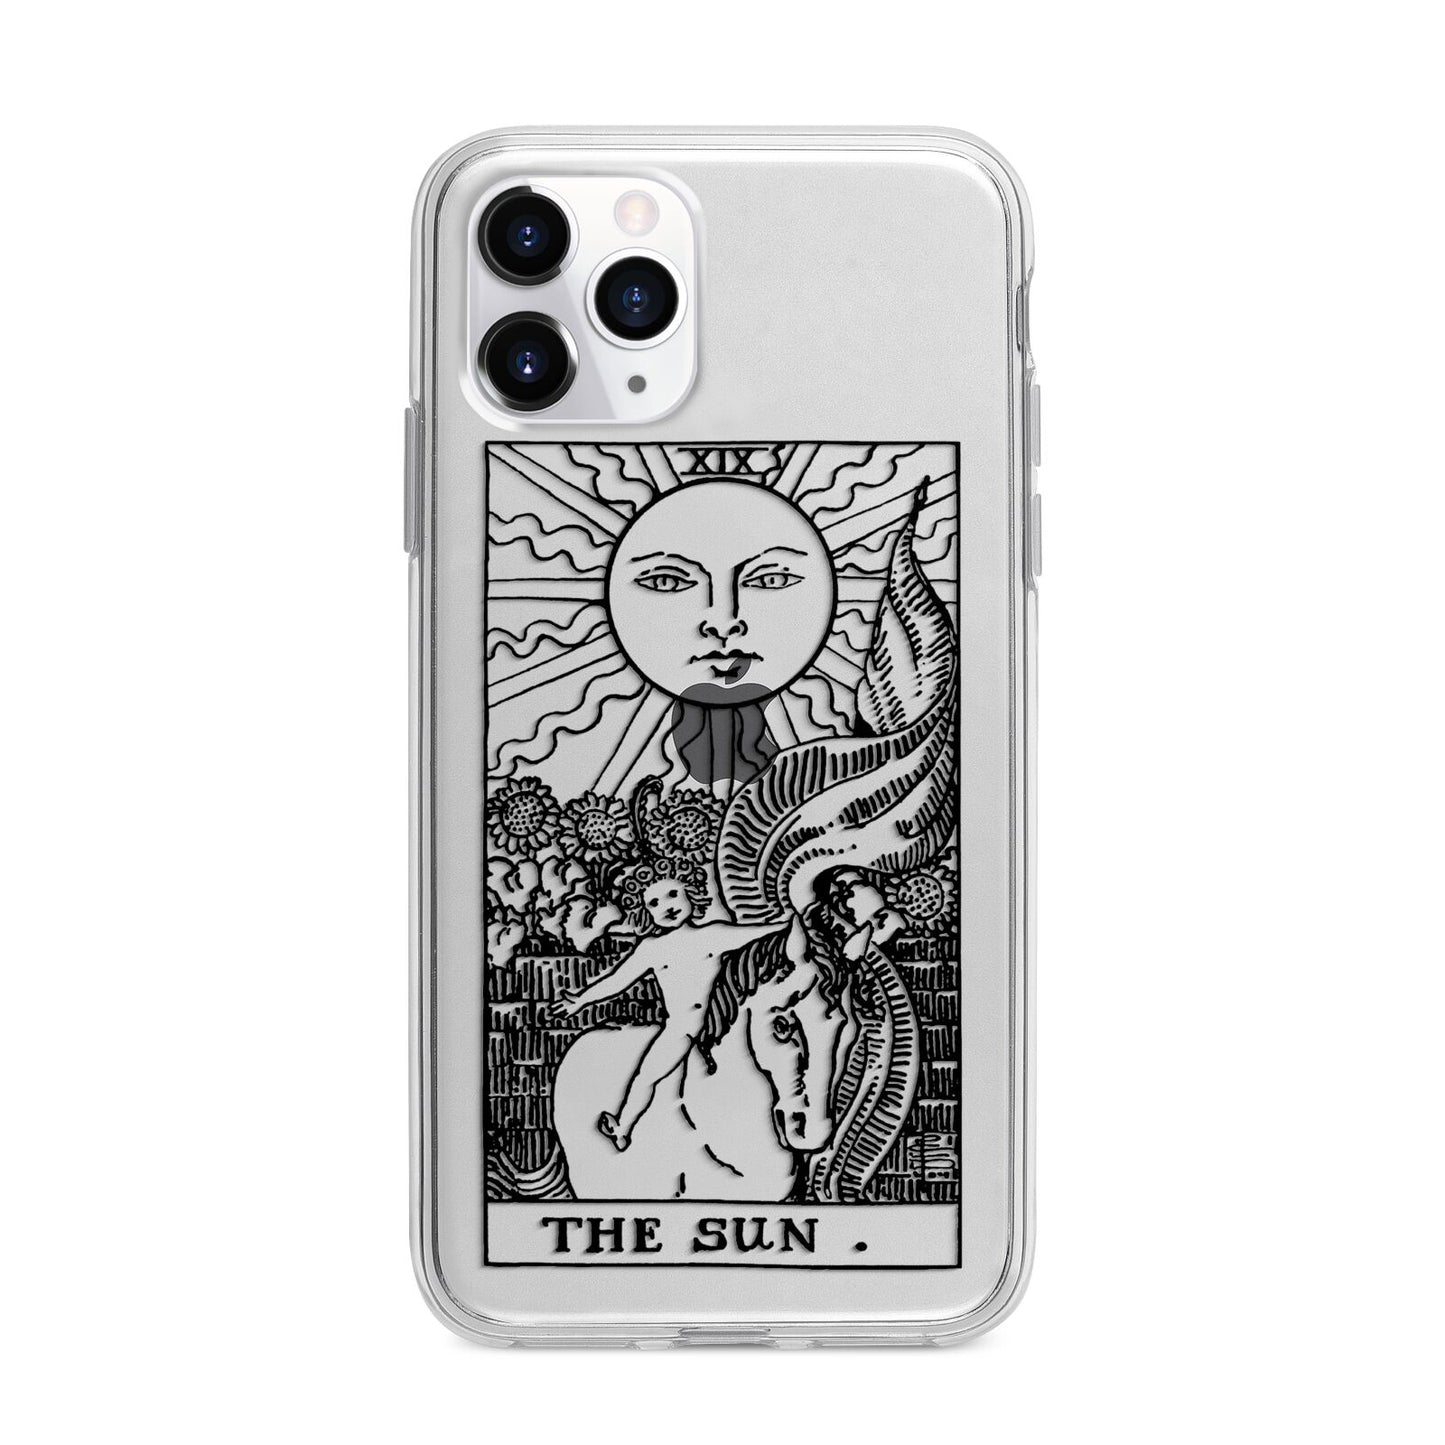 The Sun Monochrome Apple iPhone 11 Pro Max in Silver with Bumper Case